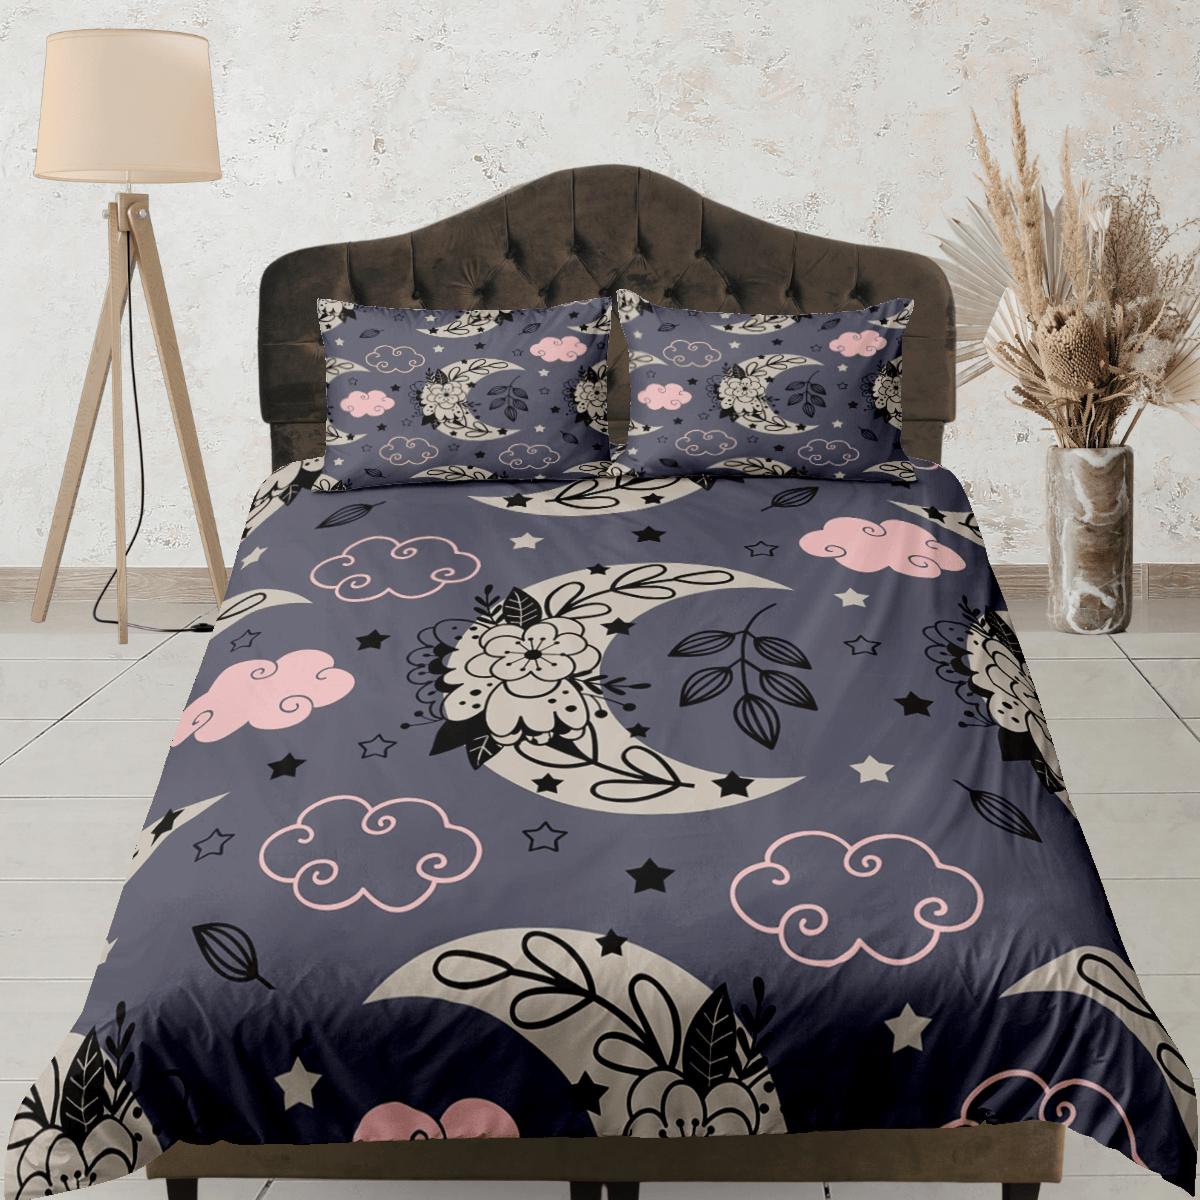 daintyduvet Celestial bedding purple grey, witchy decor dorm bedding, aesthetic duvet, boho bedding set full king queen, astrology gifts, gothic art